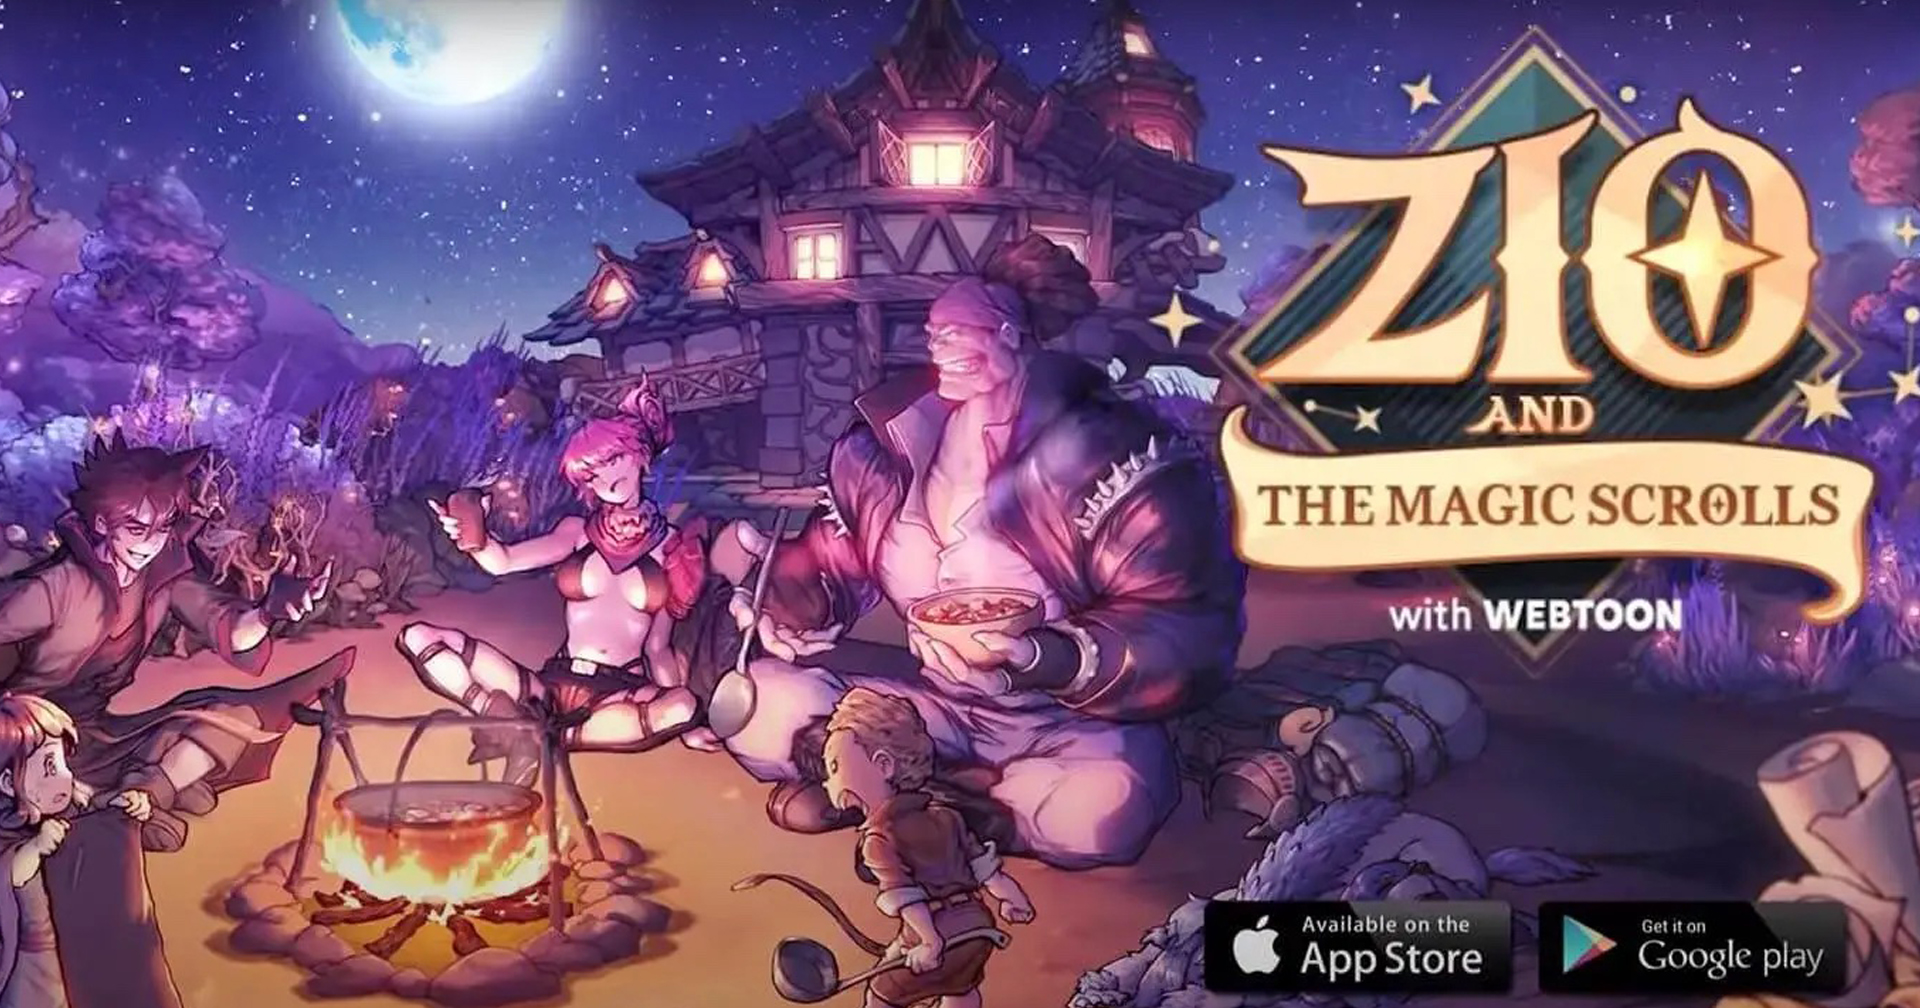 Zio and the Magic scrolls